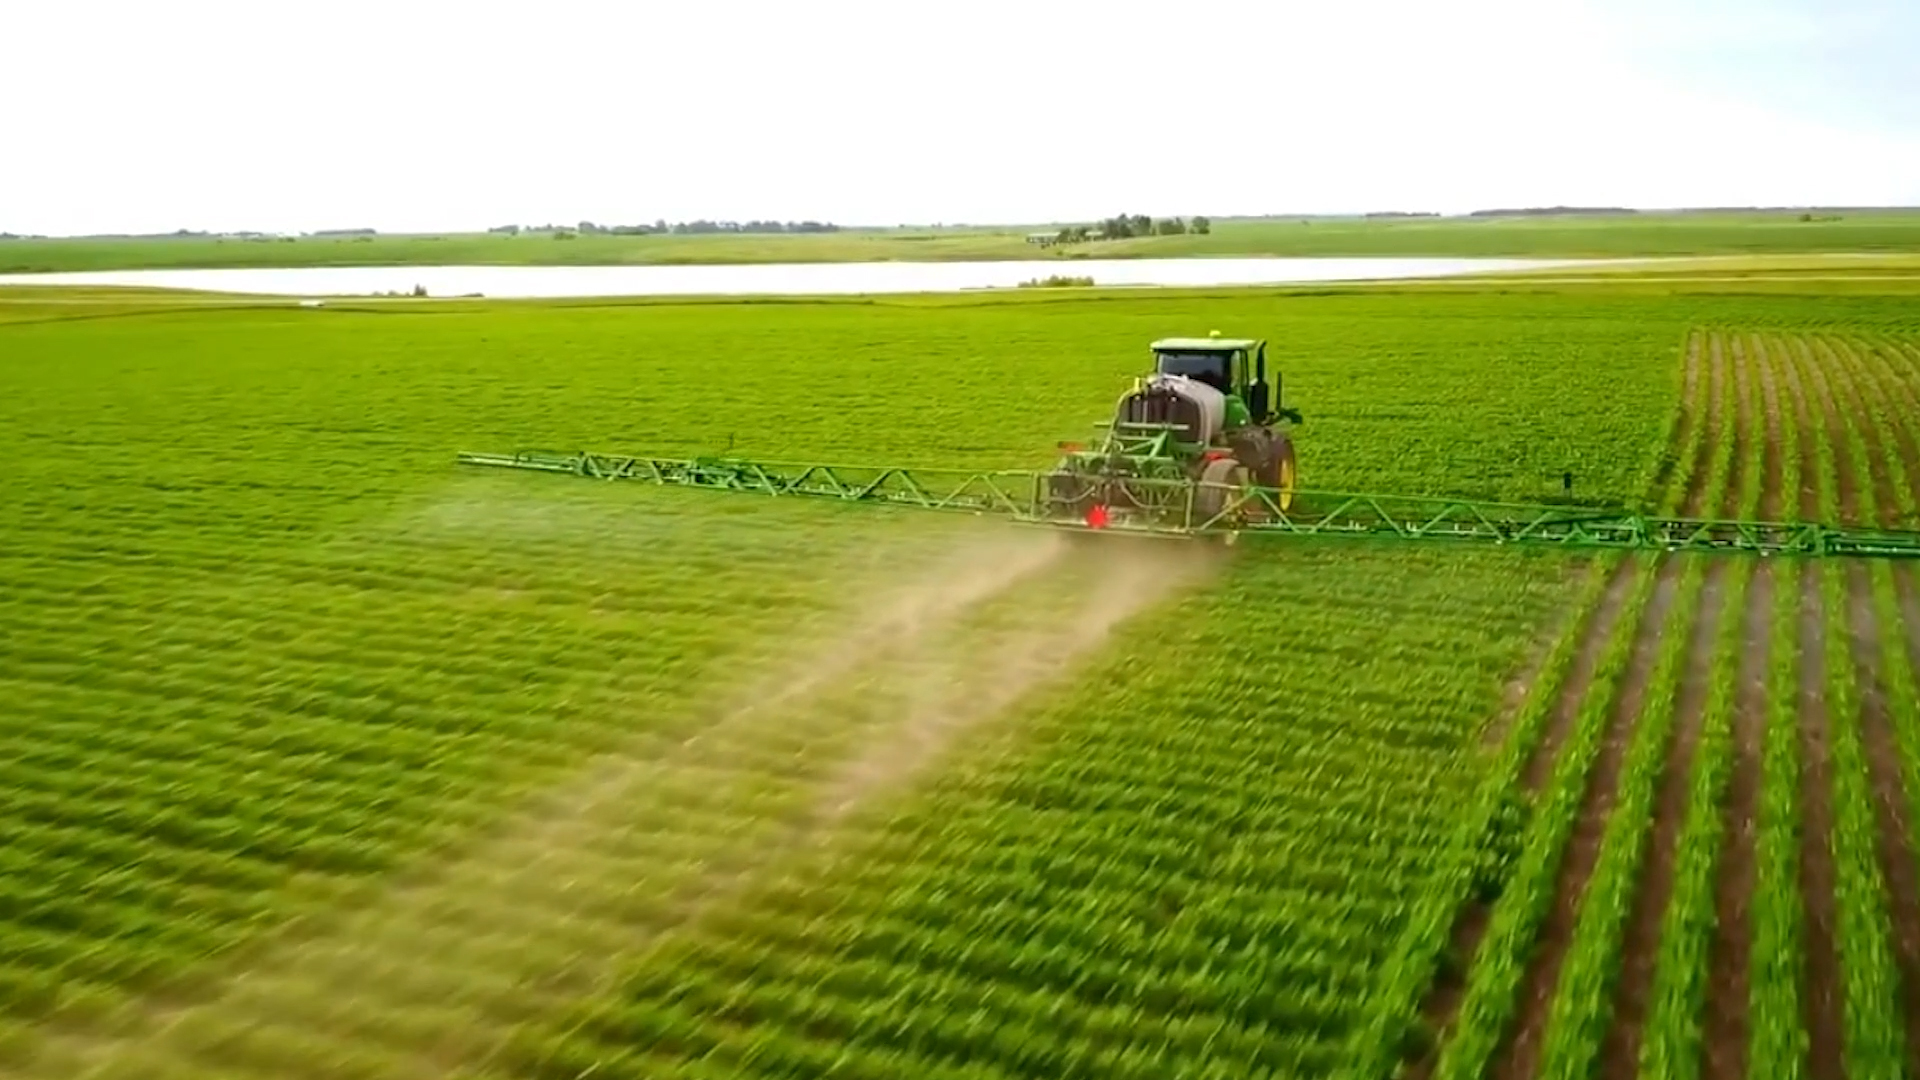 Pravilna primena pesticida smanjuje zdravstveni rizik